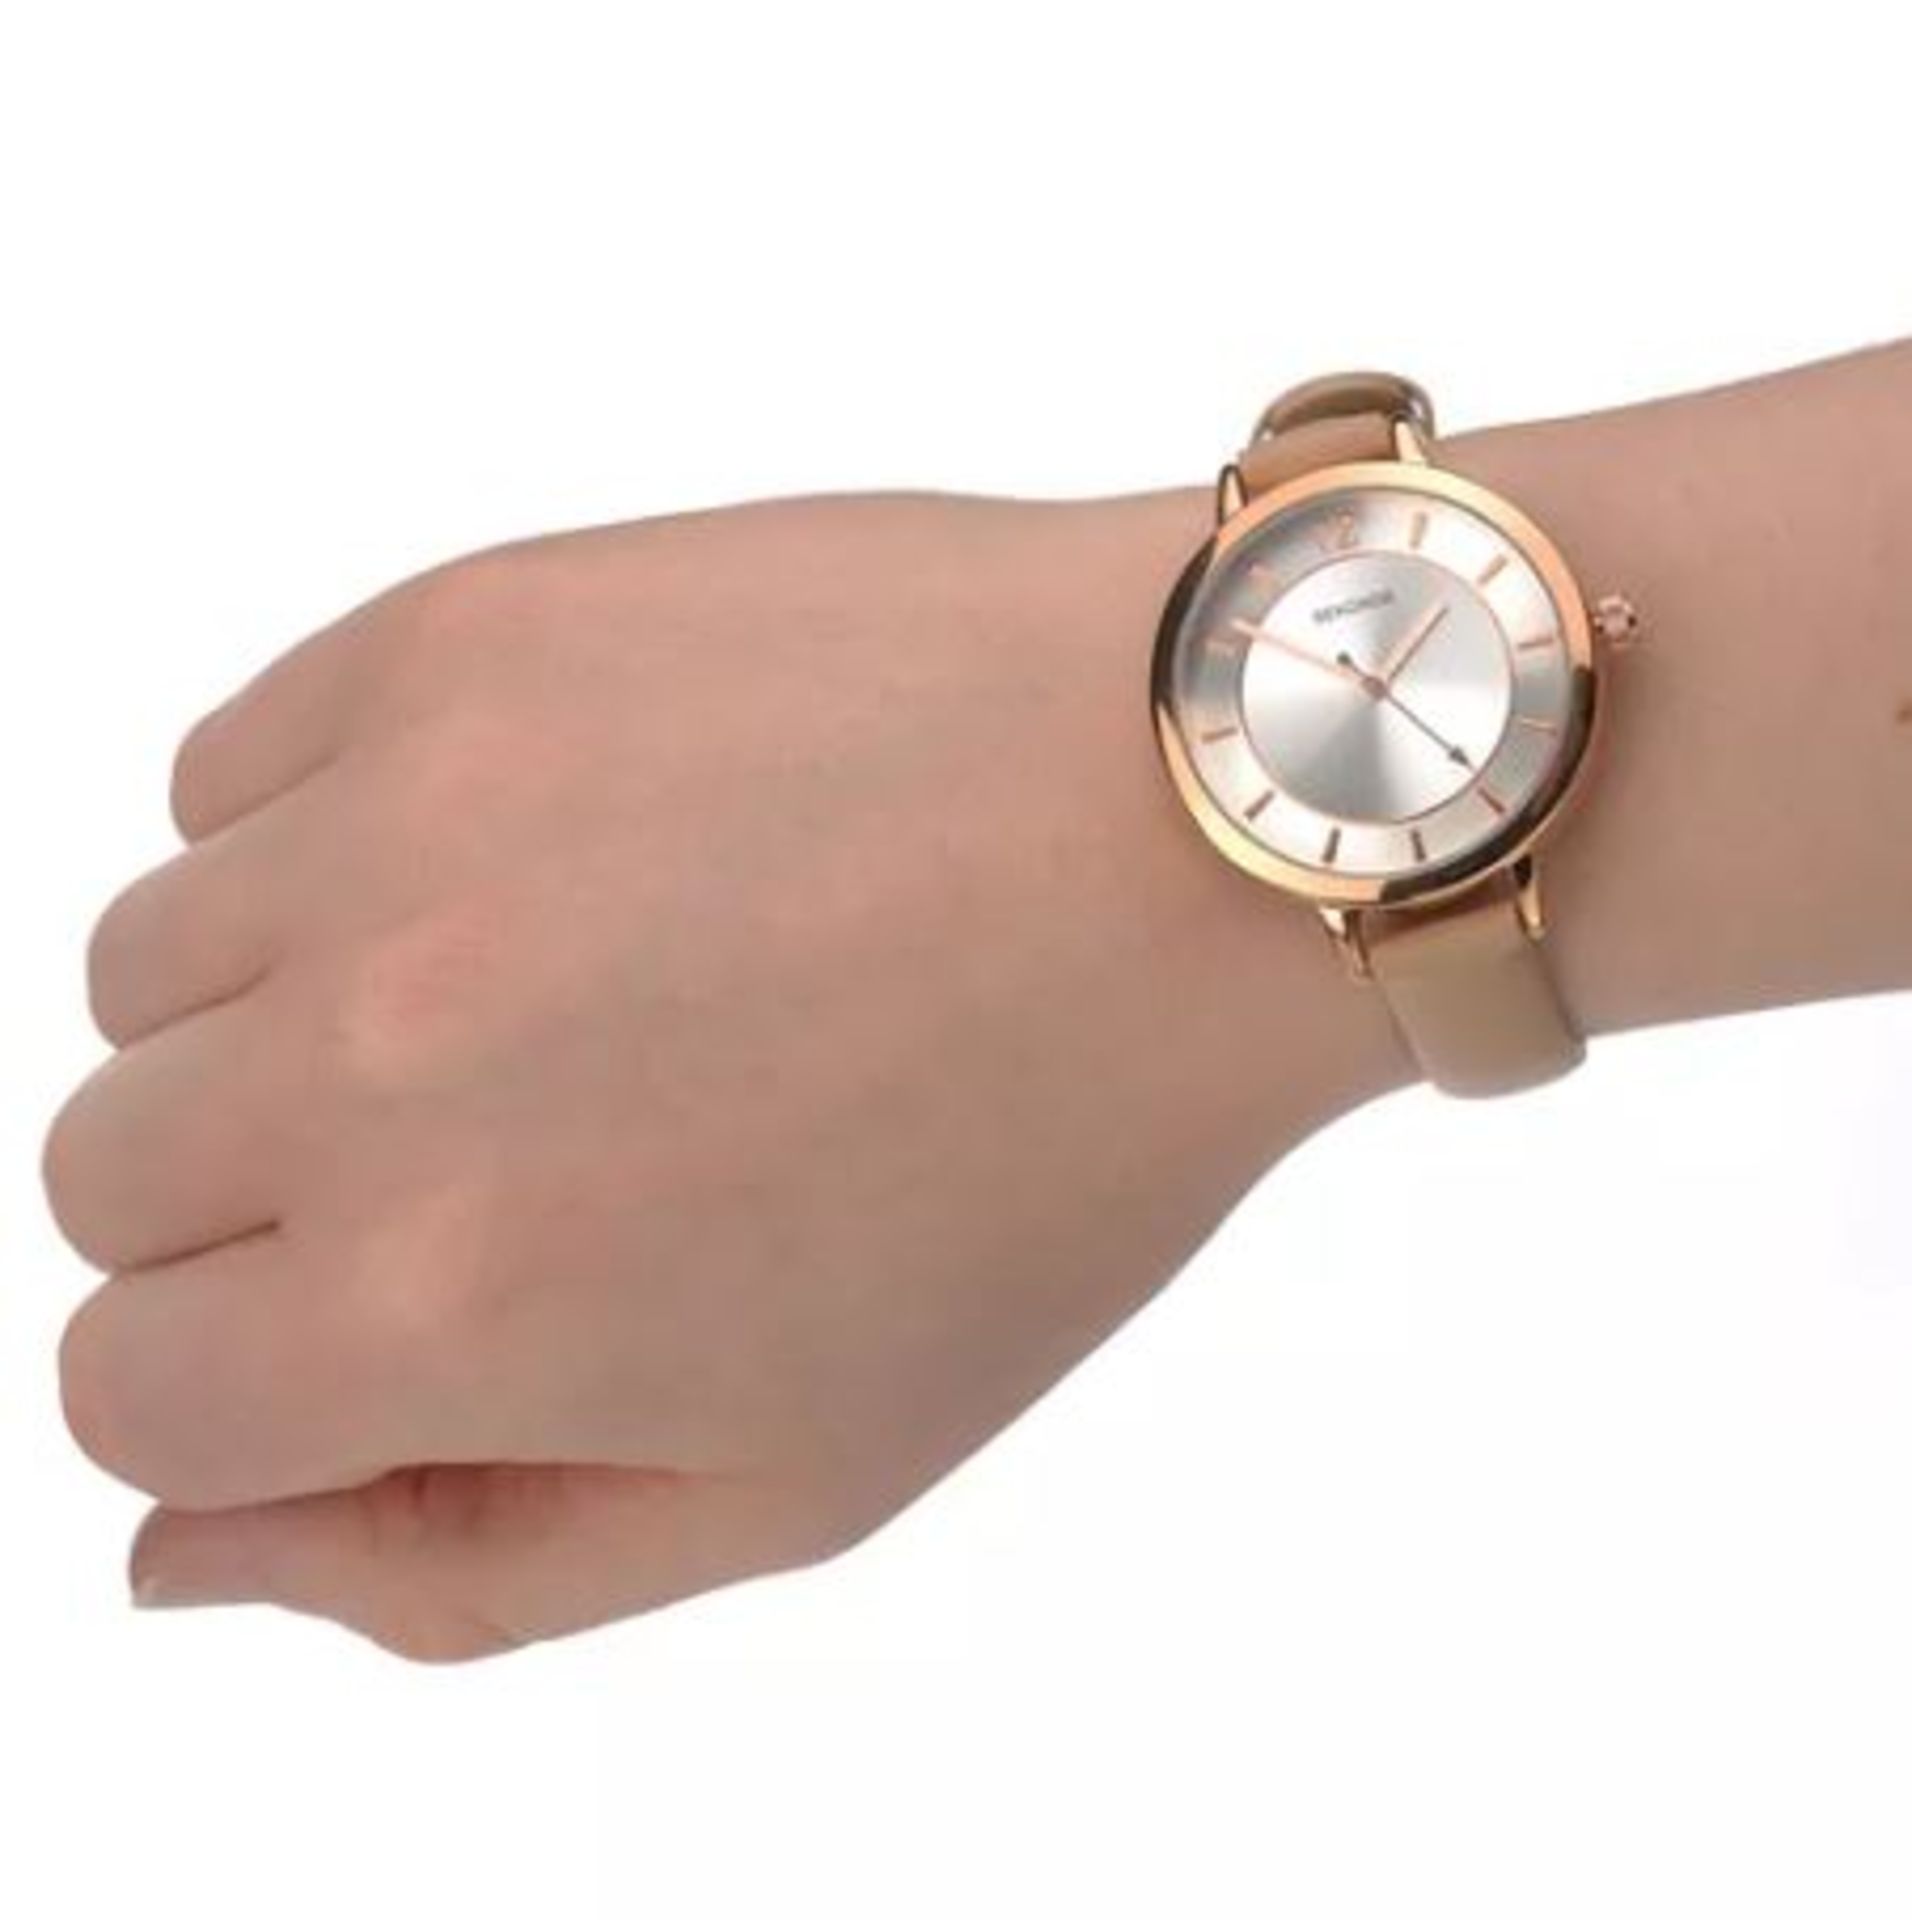 Brand New Sekonda Women's Quartz Watch with Analogue Display 2137.28 - Image 3 of 4